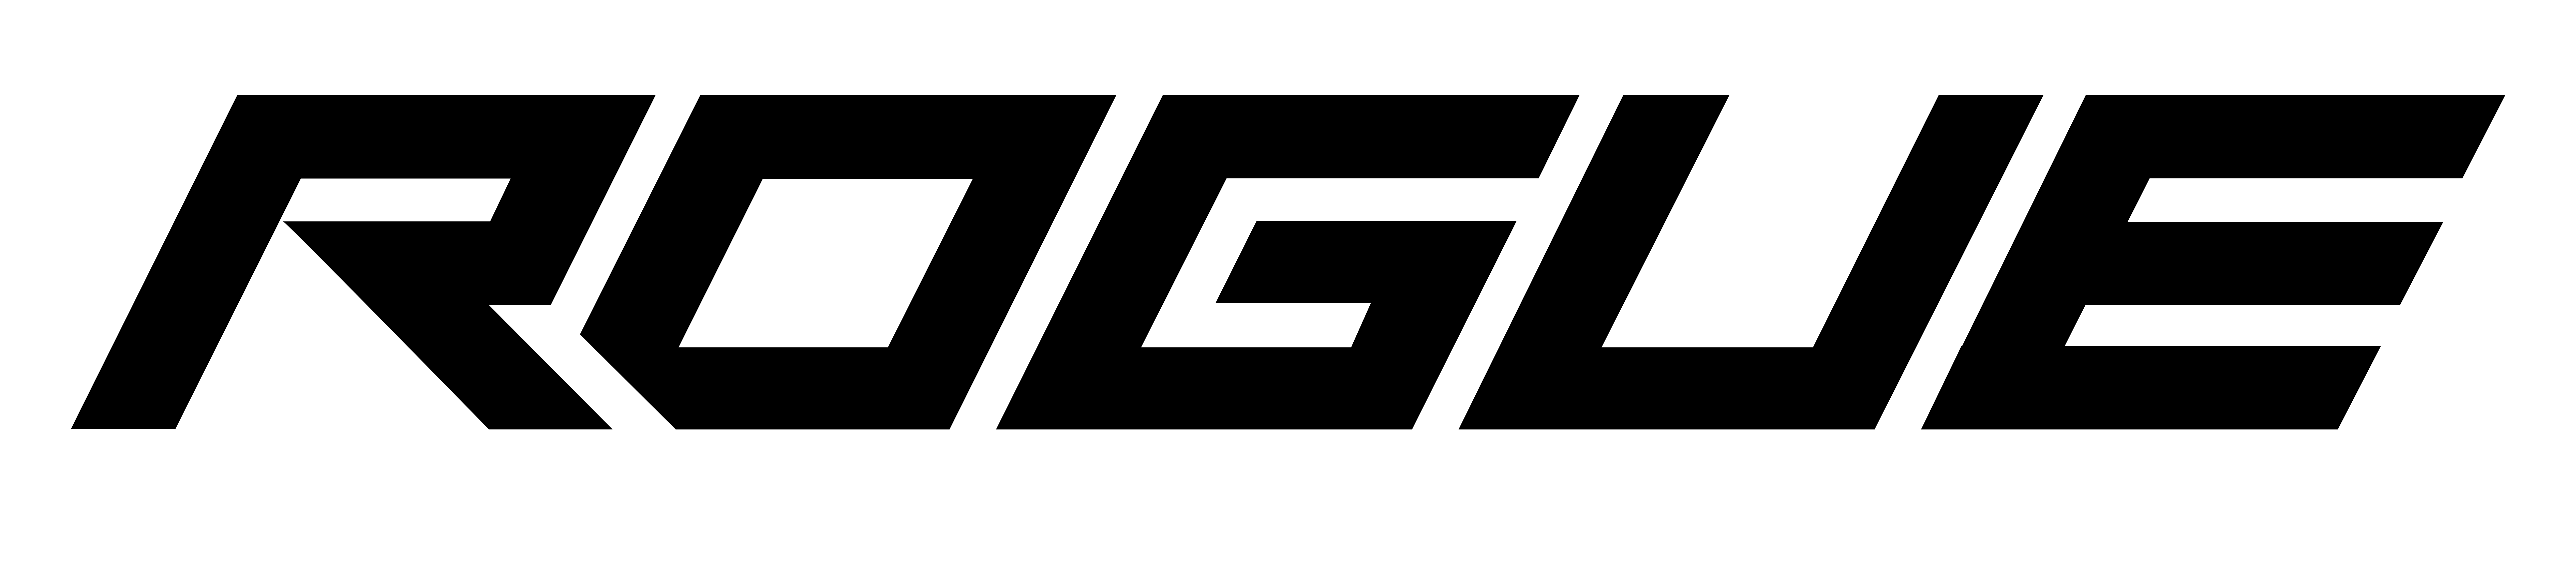 Logoblack